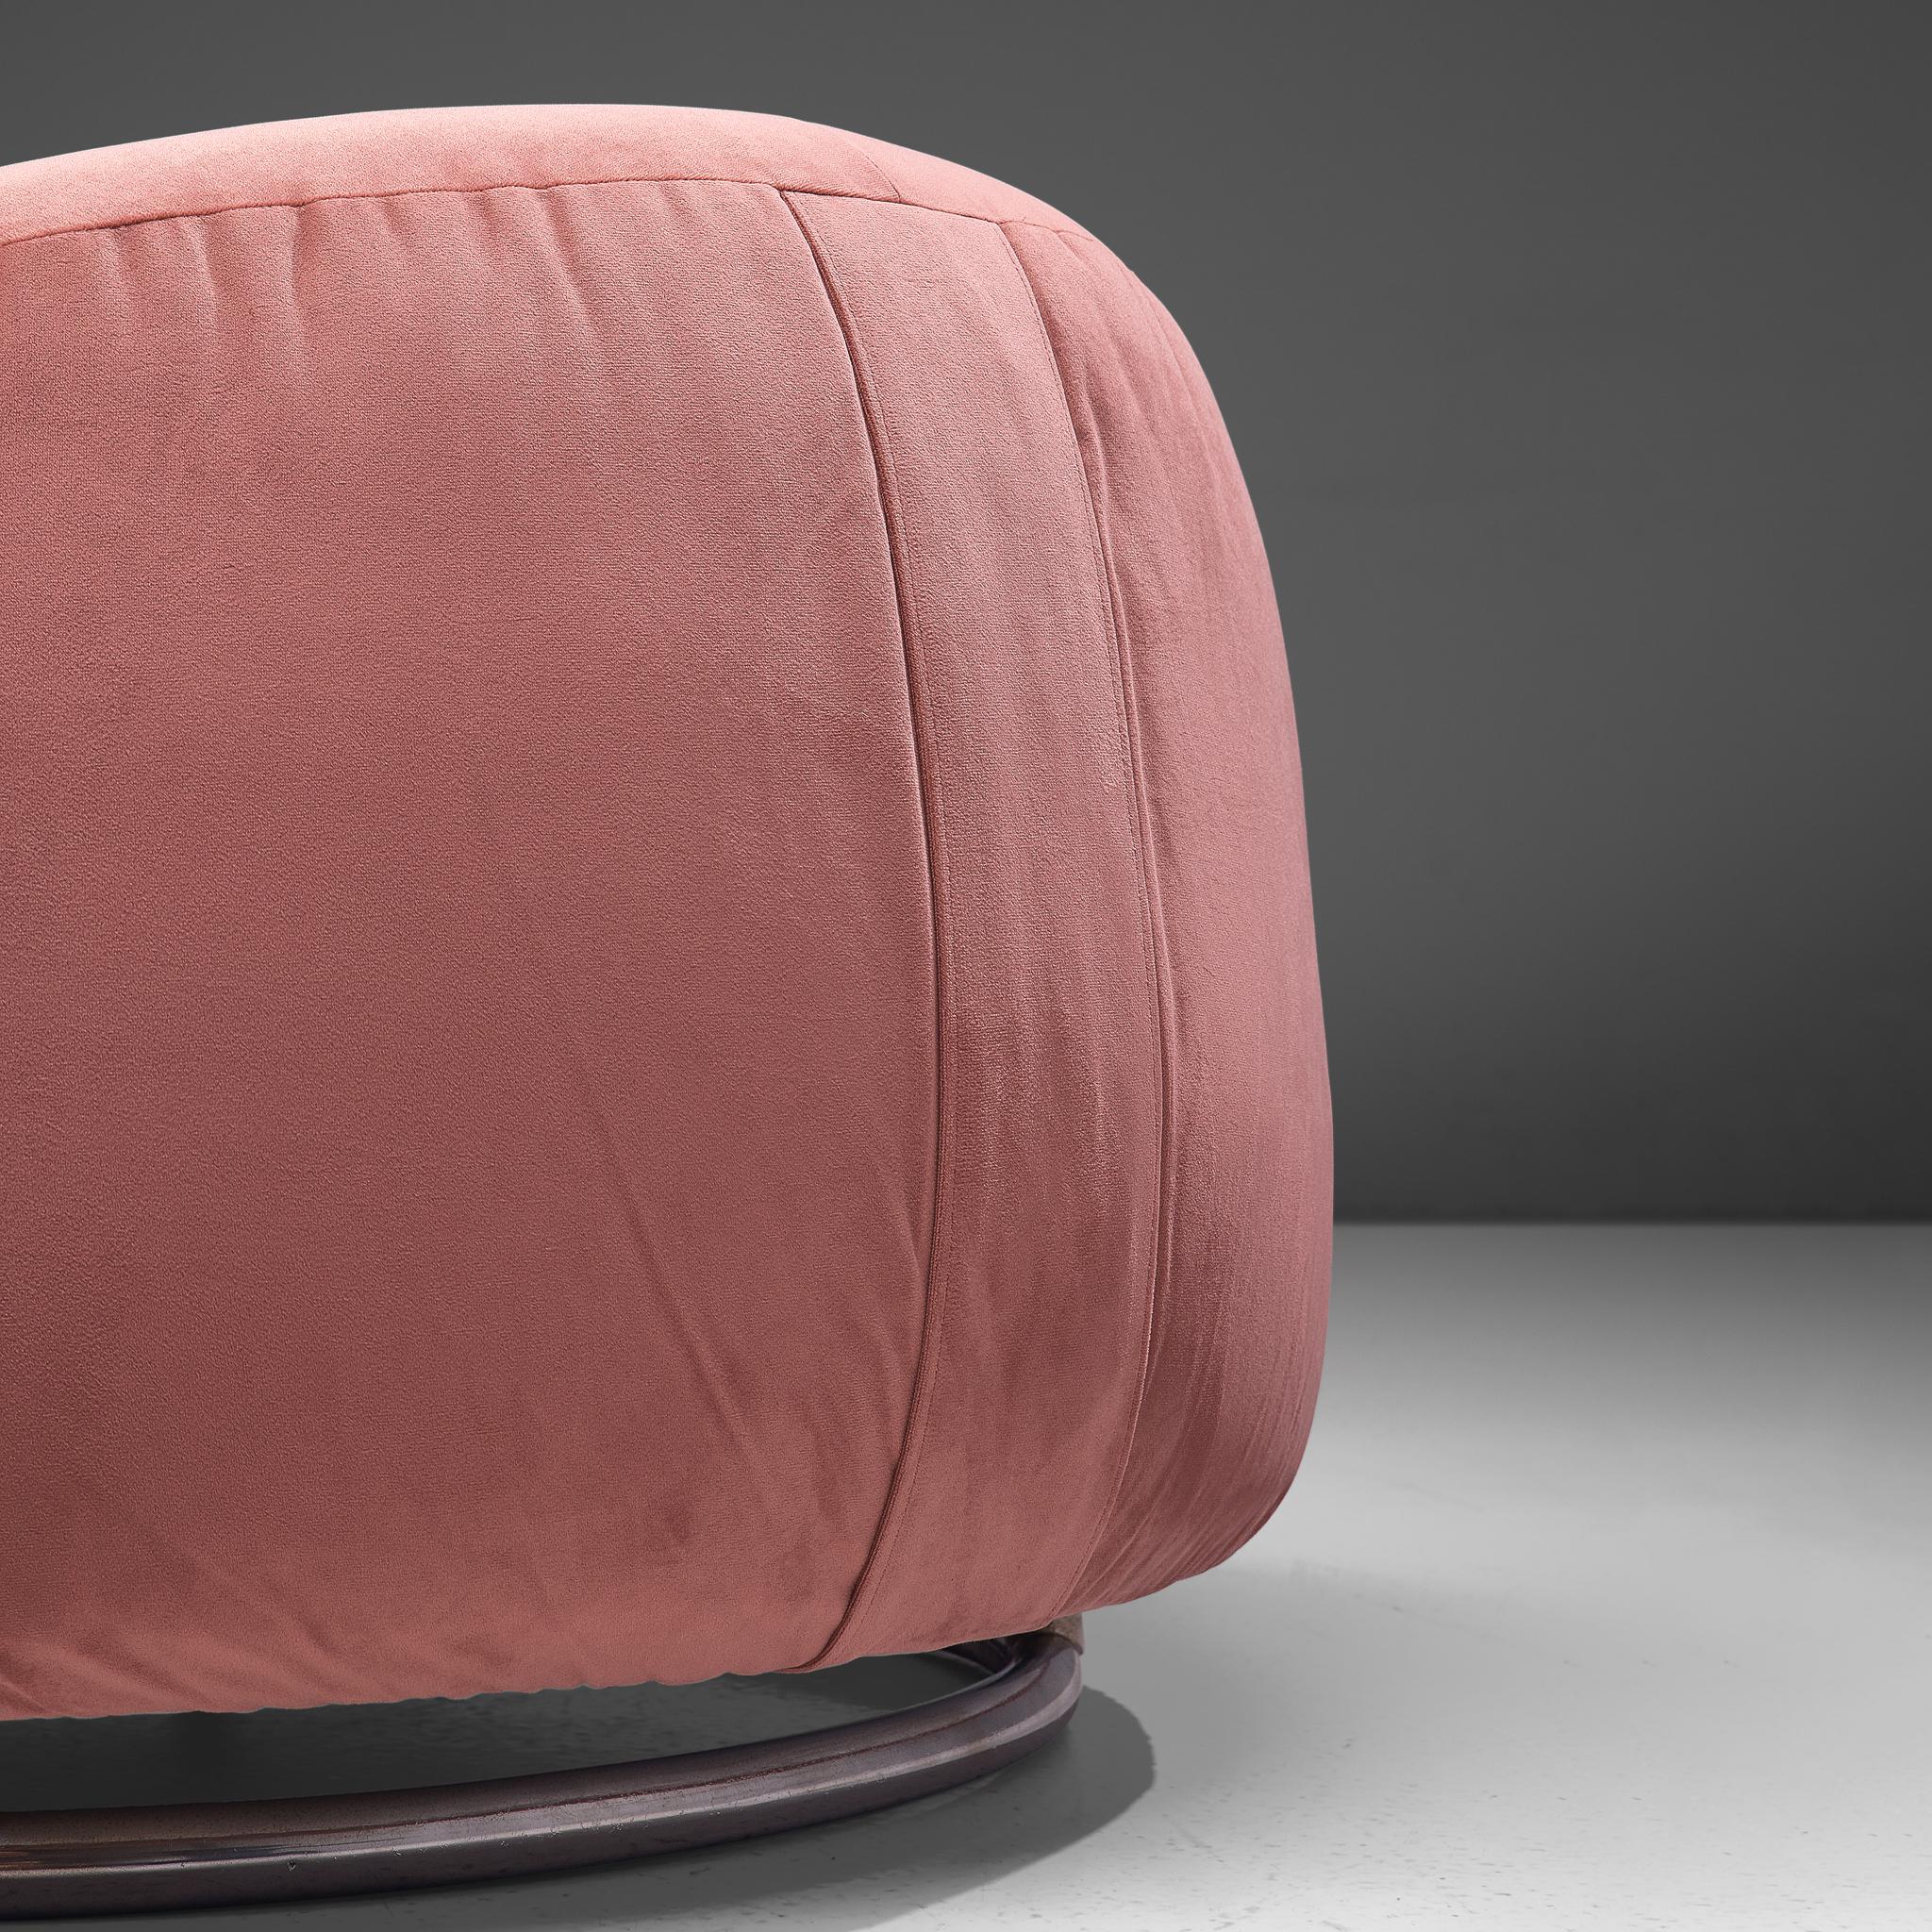 pink circle chair